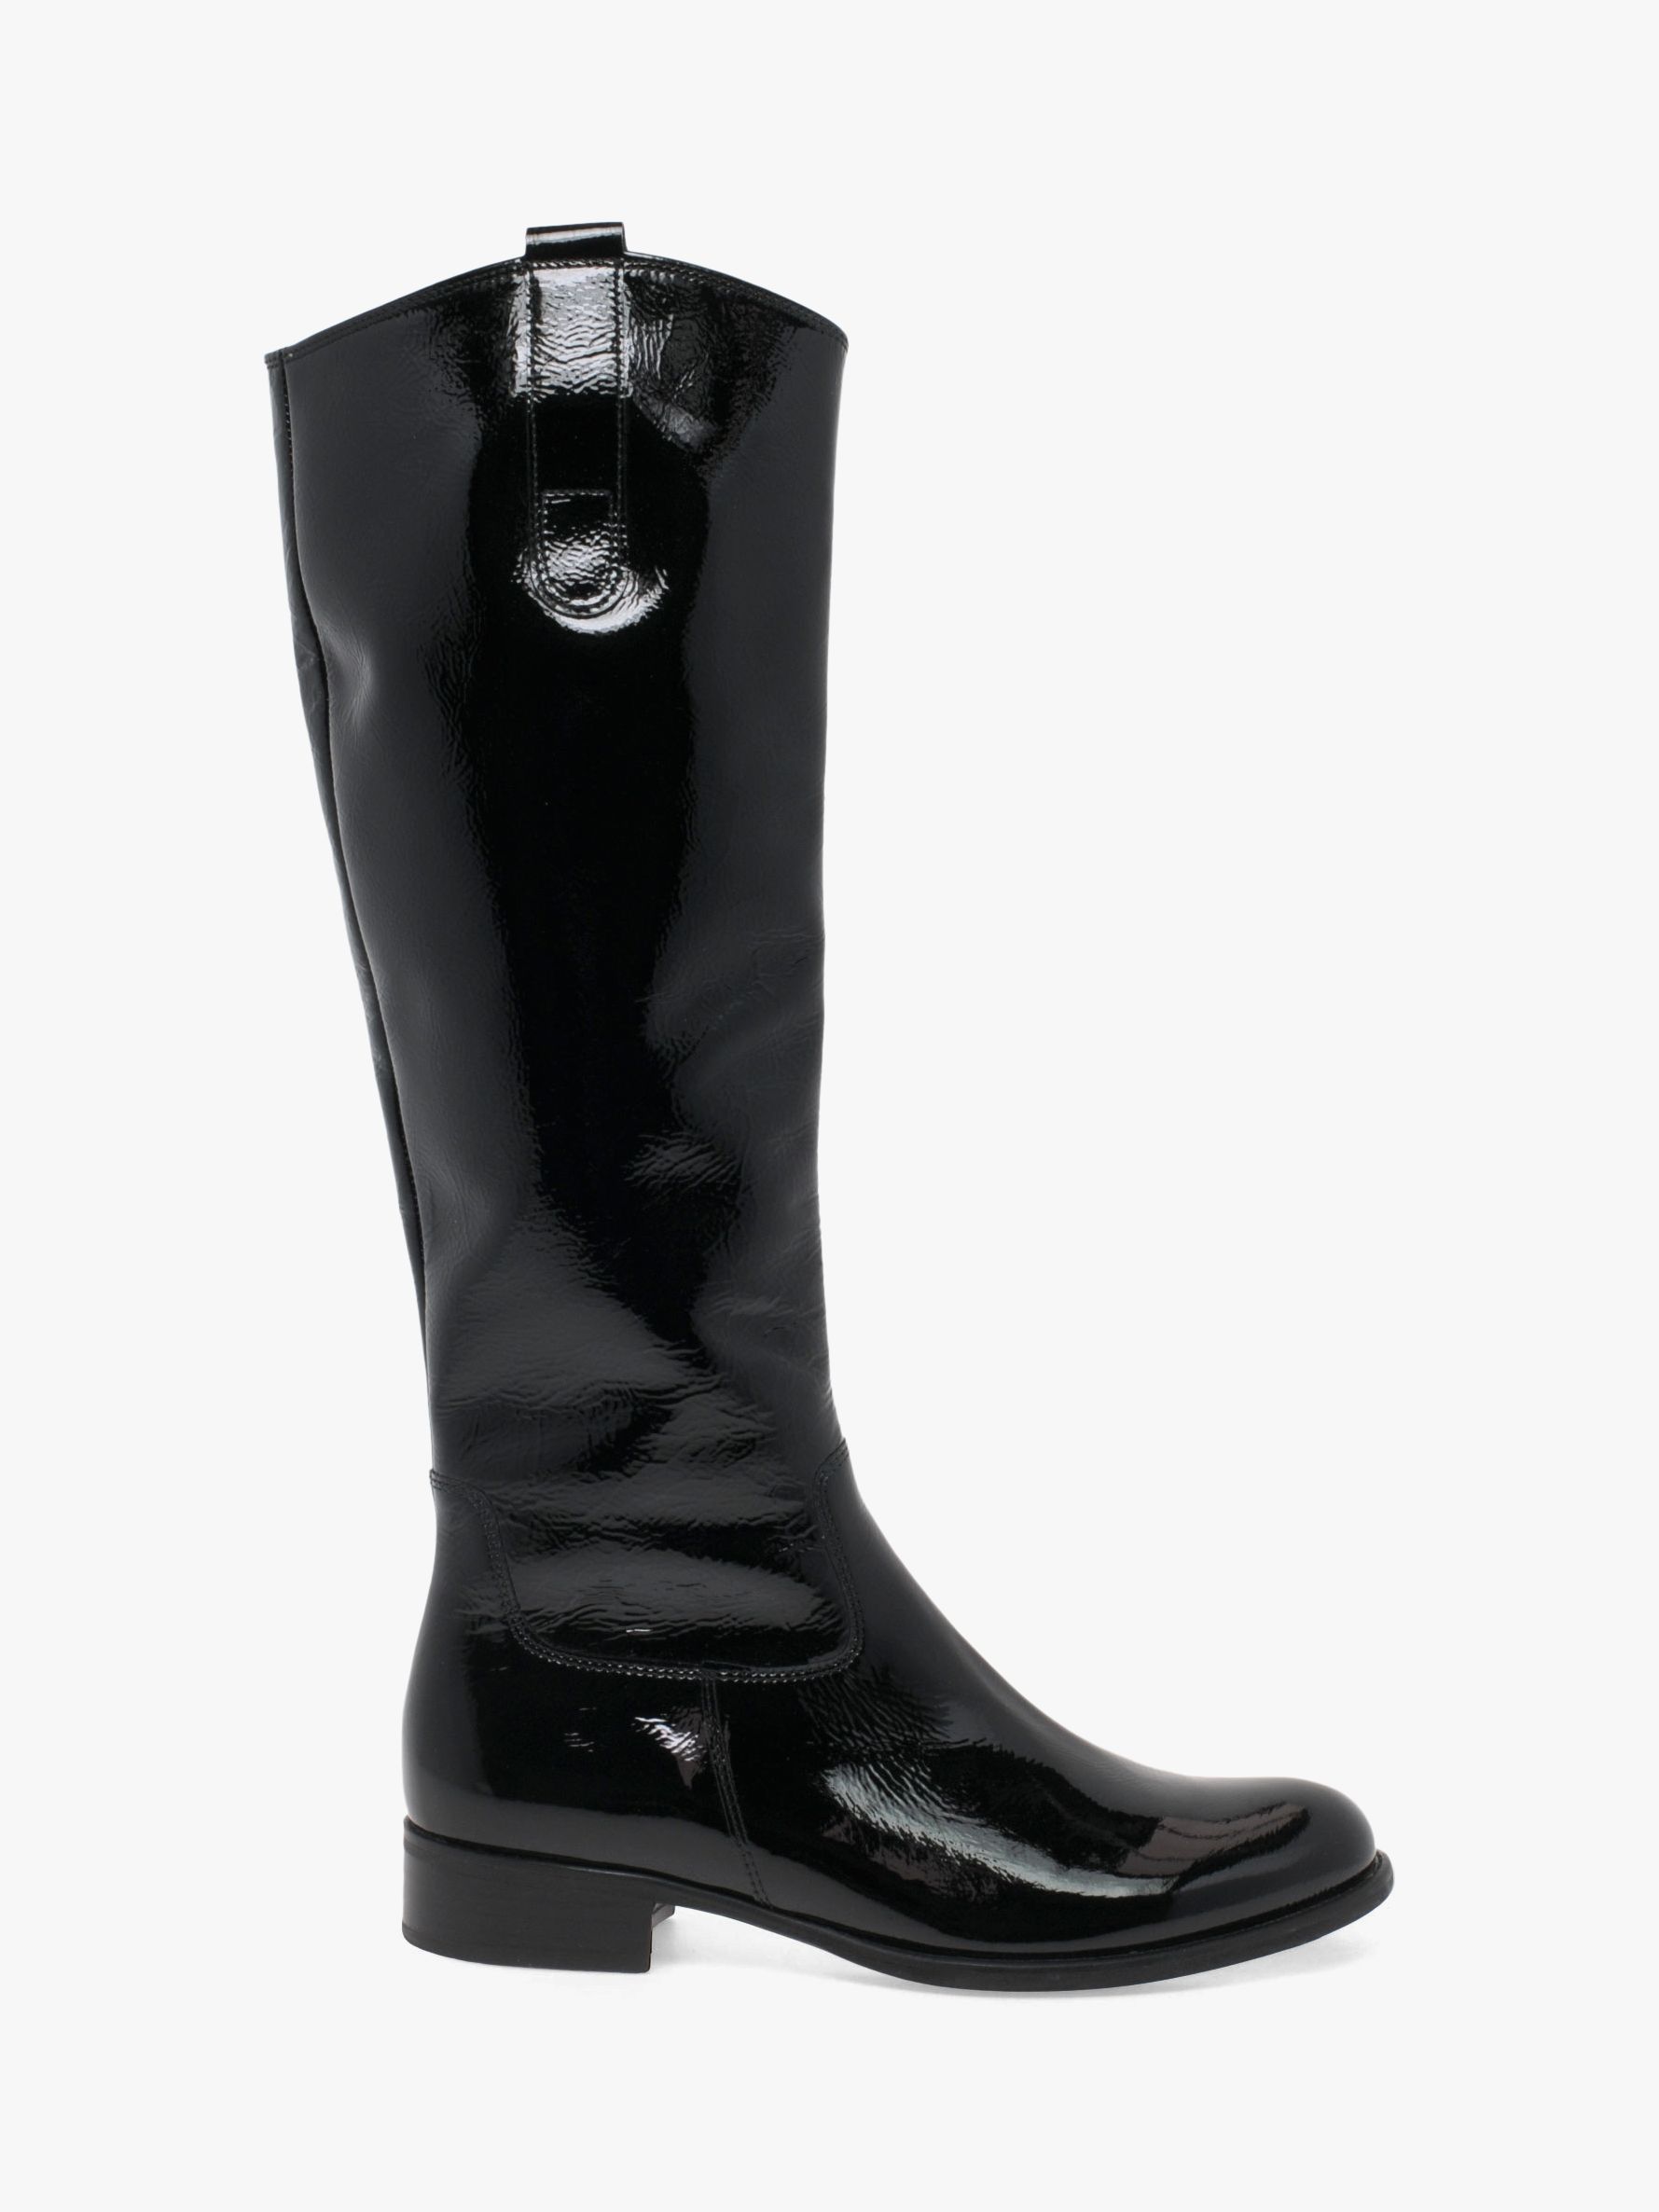 Gabor Brook Patent Slim Calf Boots, Black, 4